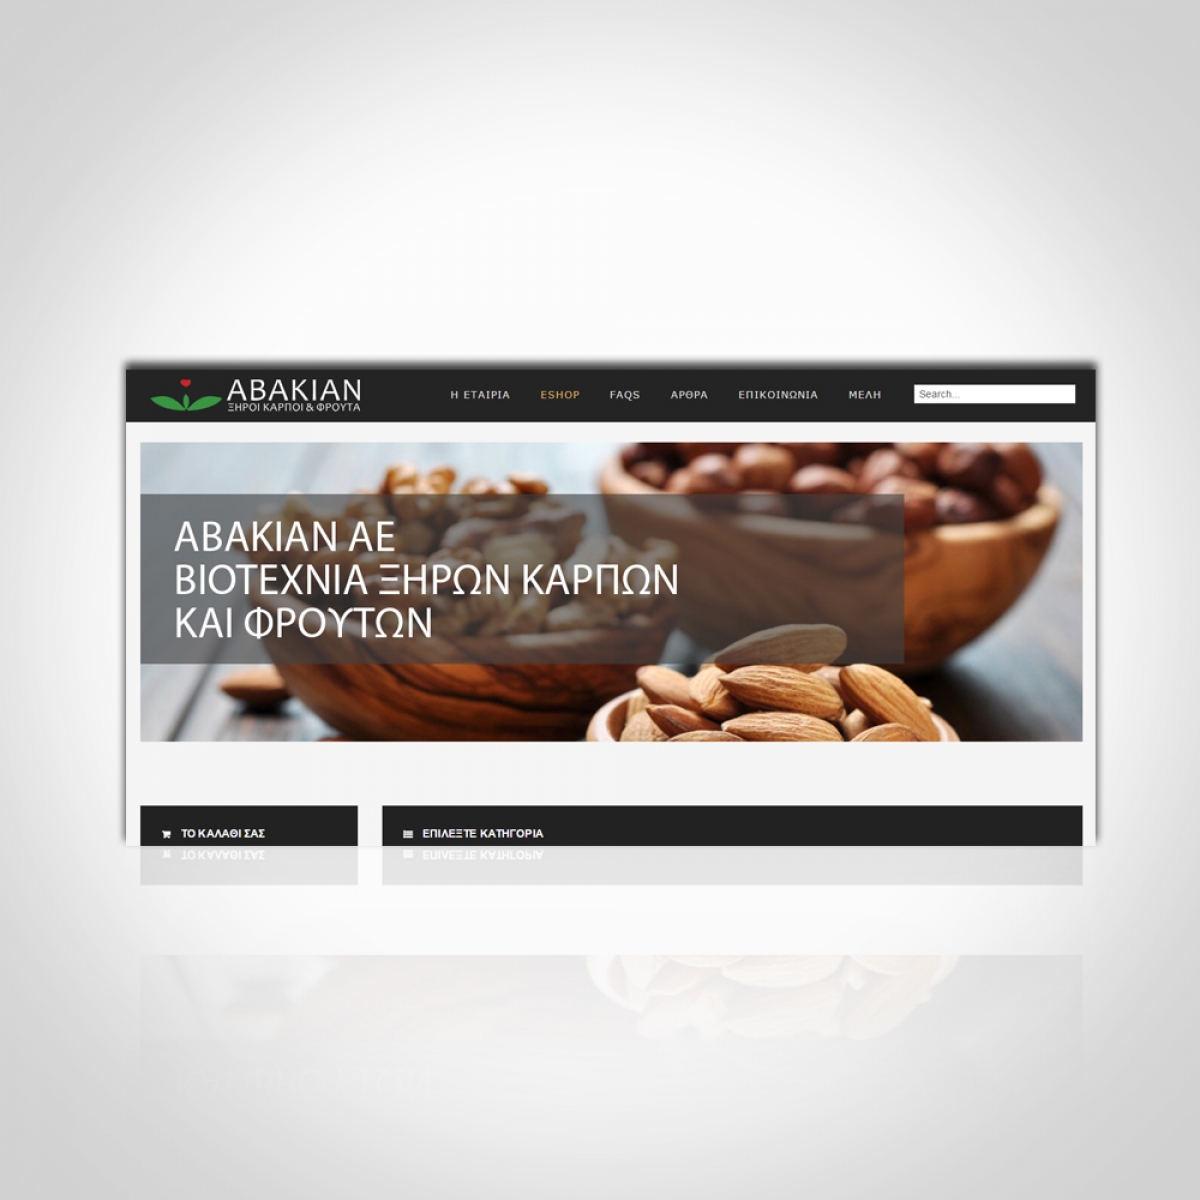 Avakian.gr - Ηλεκτρονικό κατάστημα ξηρών καρπών